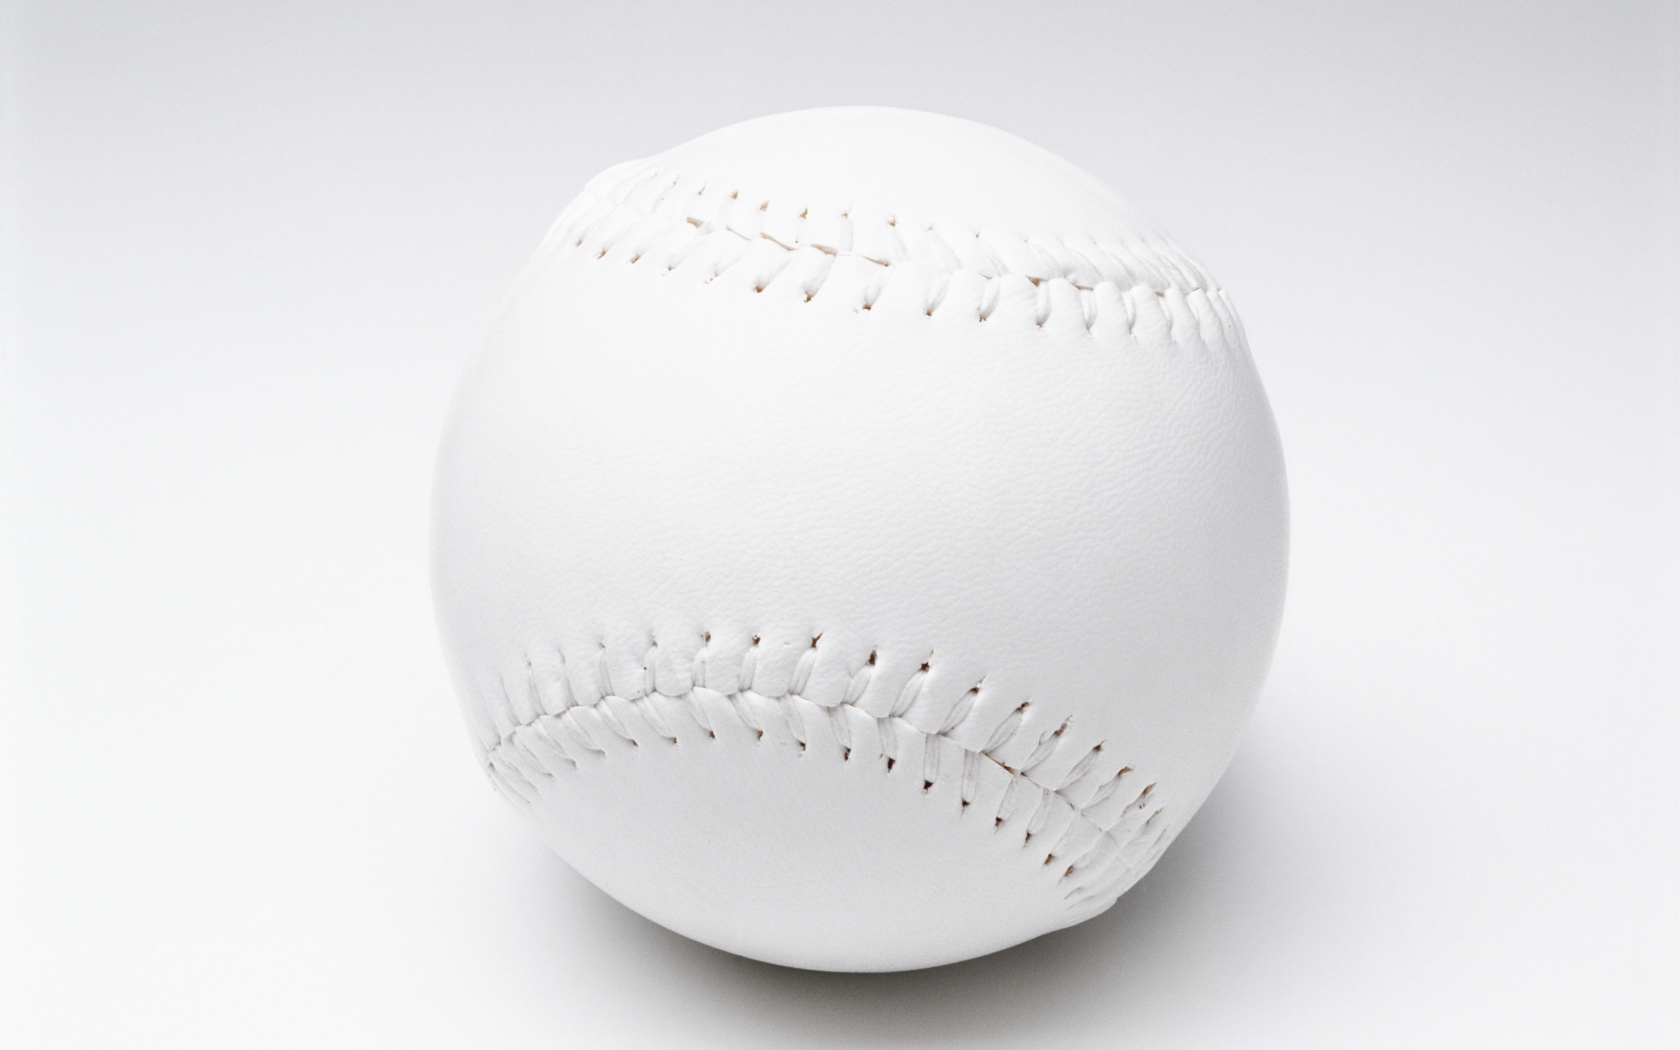 White baseball ball on a white background